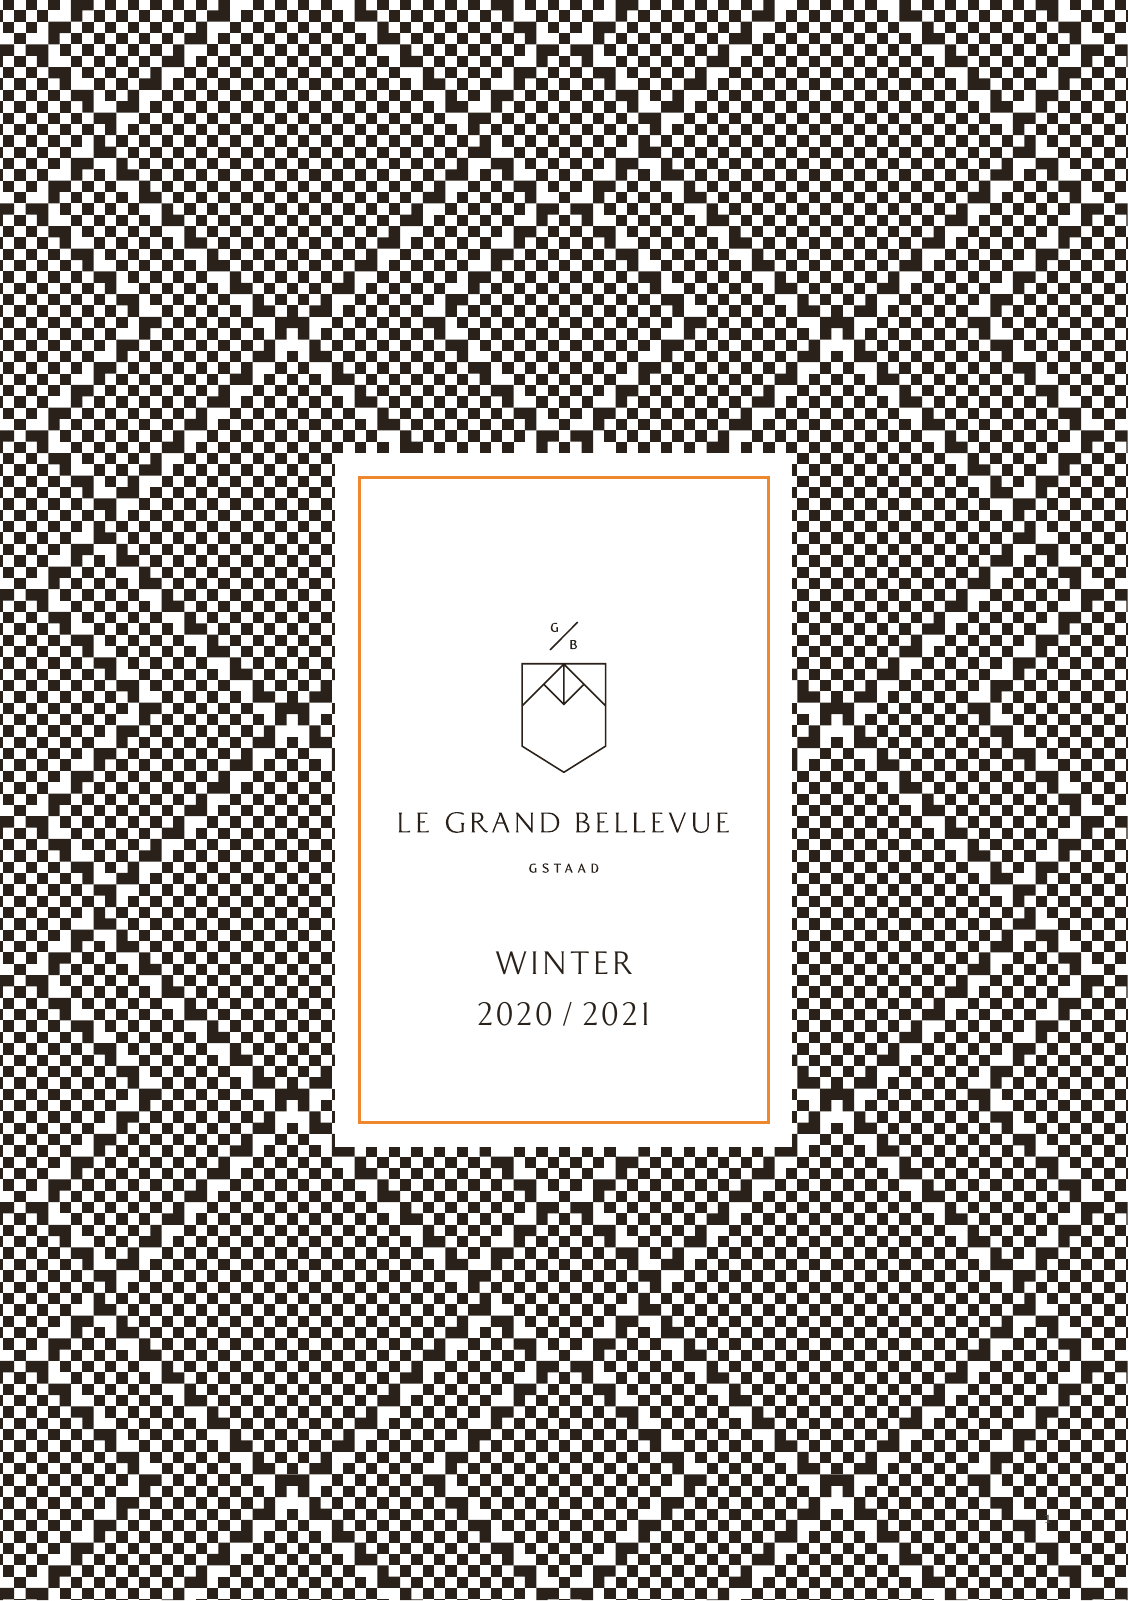 Vorschau Le Grand Bellevue Winter 2020/21 EN Seite 1